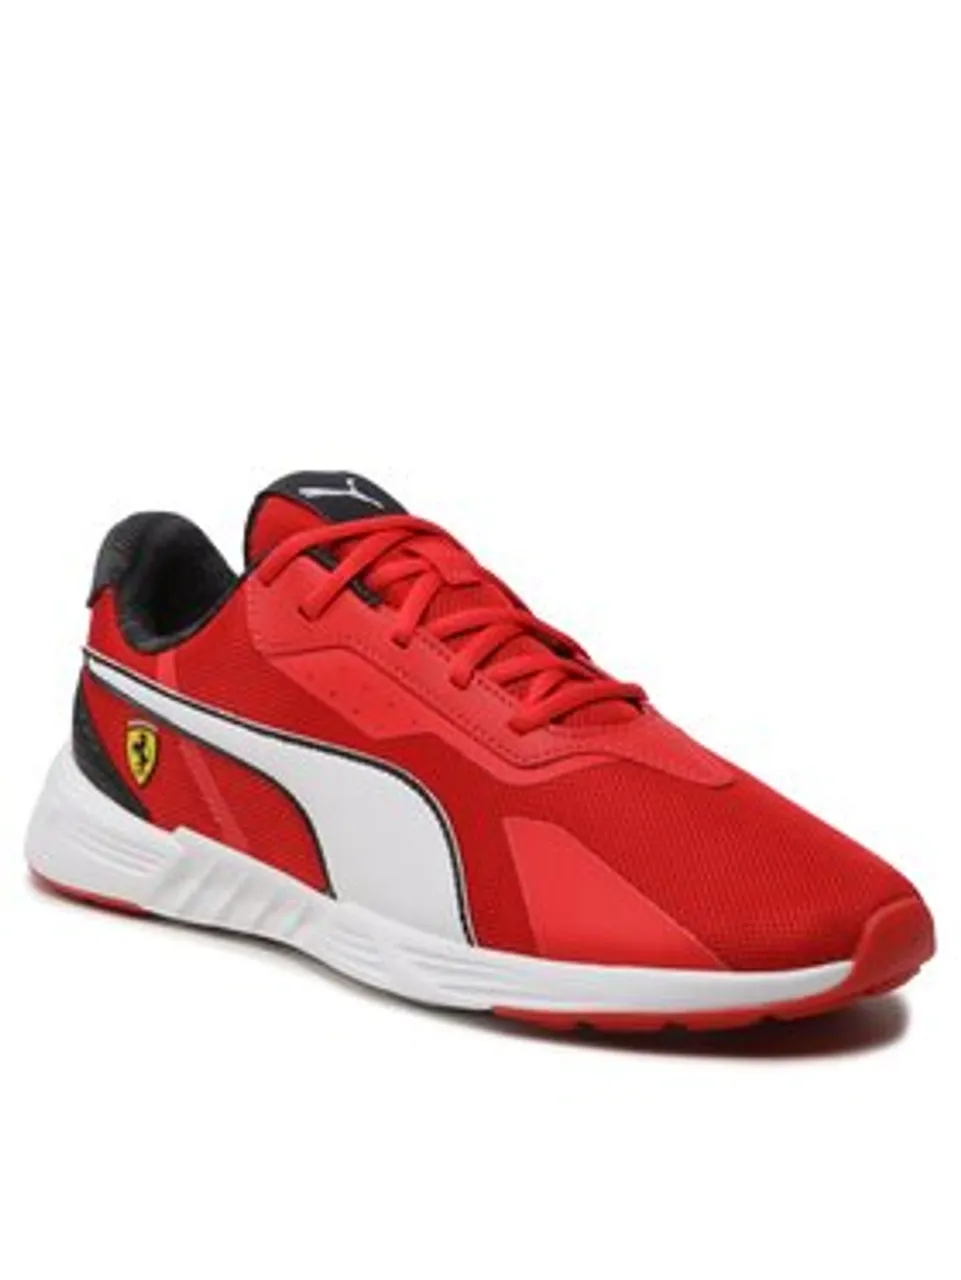 Puma Sneakers Ferrari Tiburion 307515 02 Rot